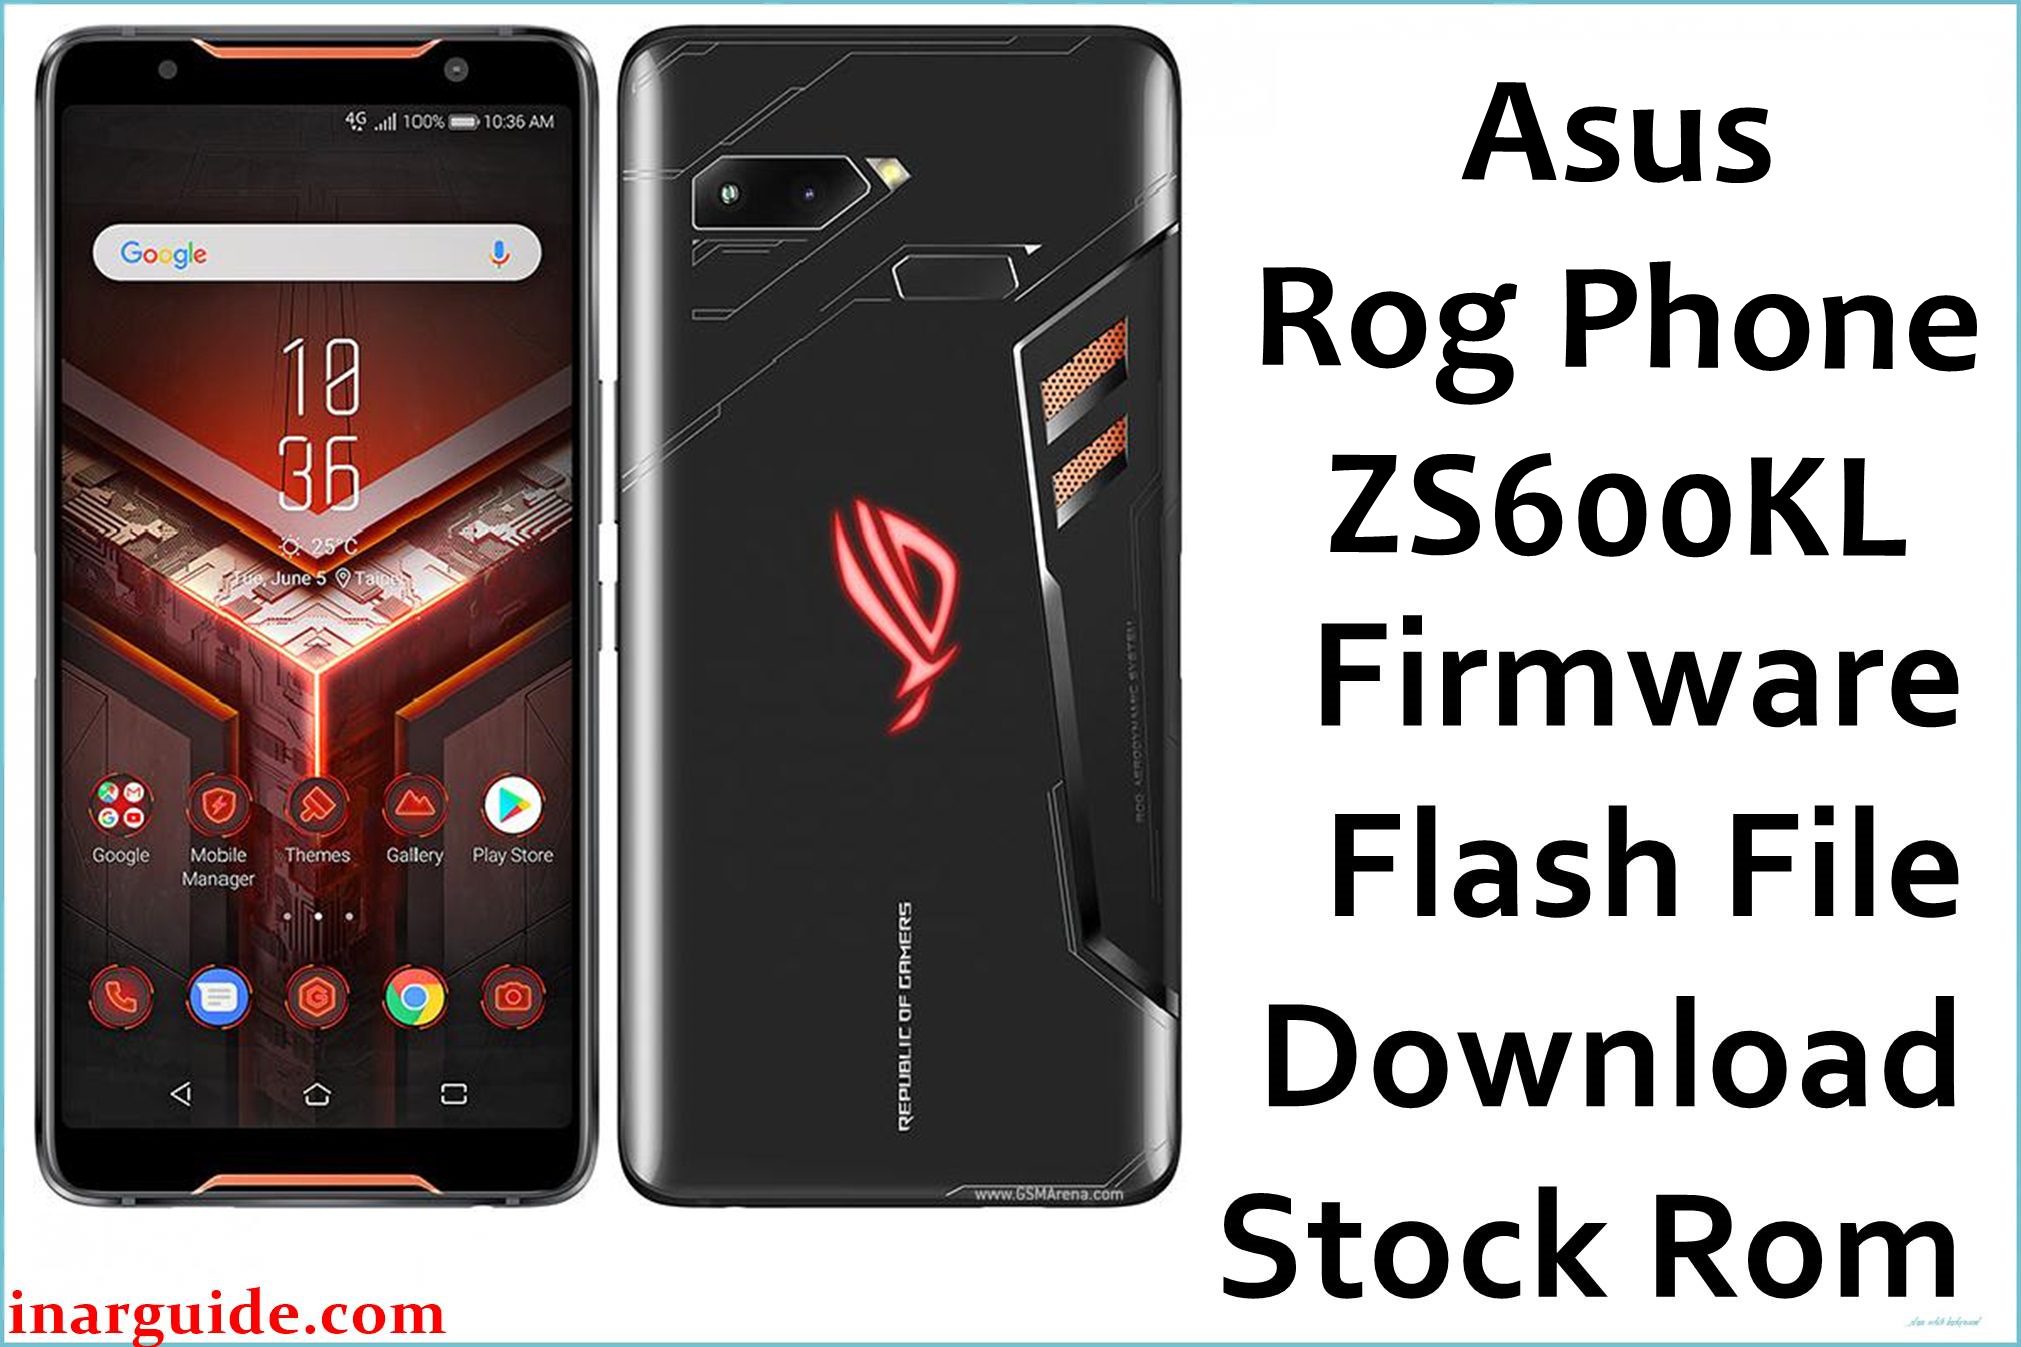 Asus Rog Phone ZS600KL